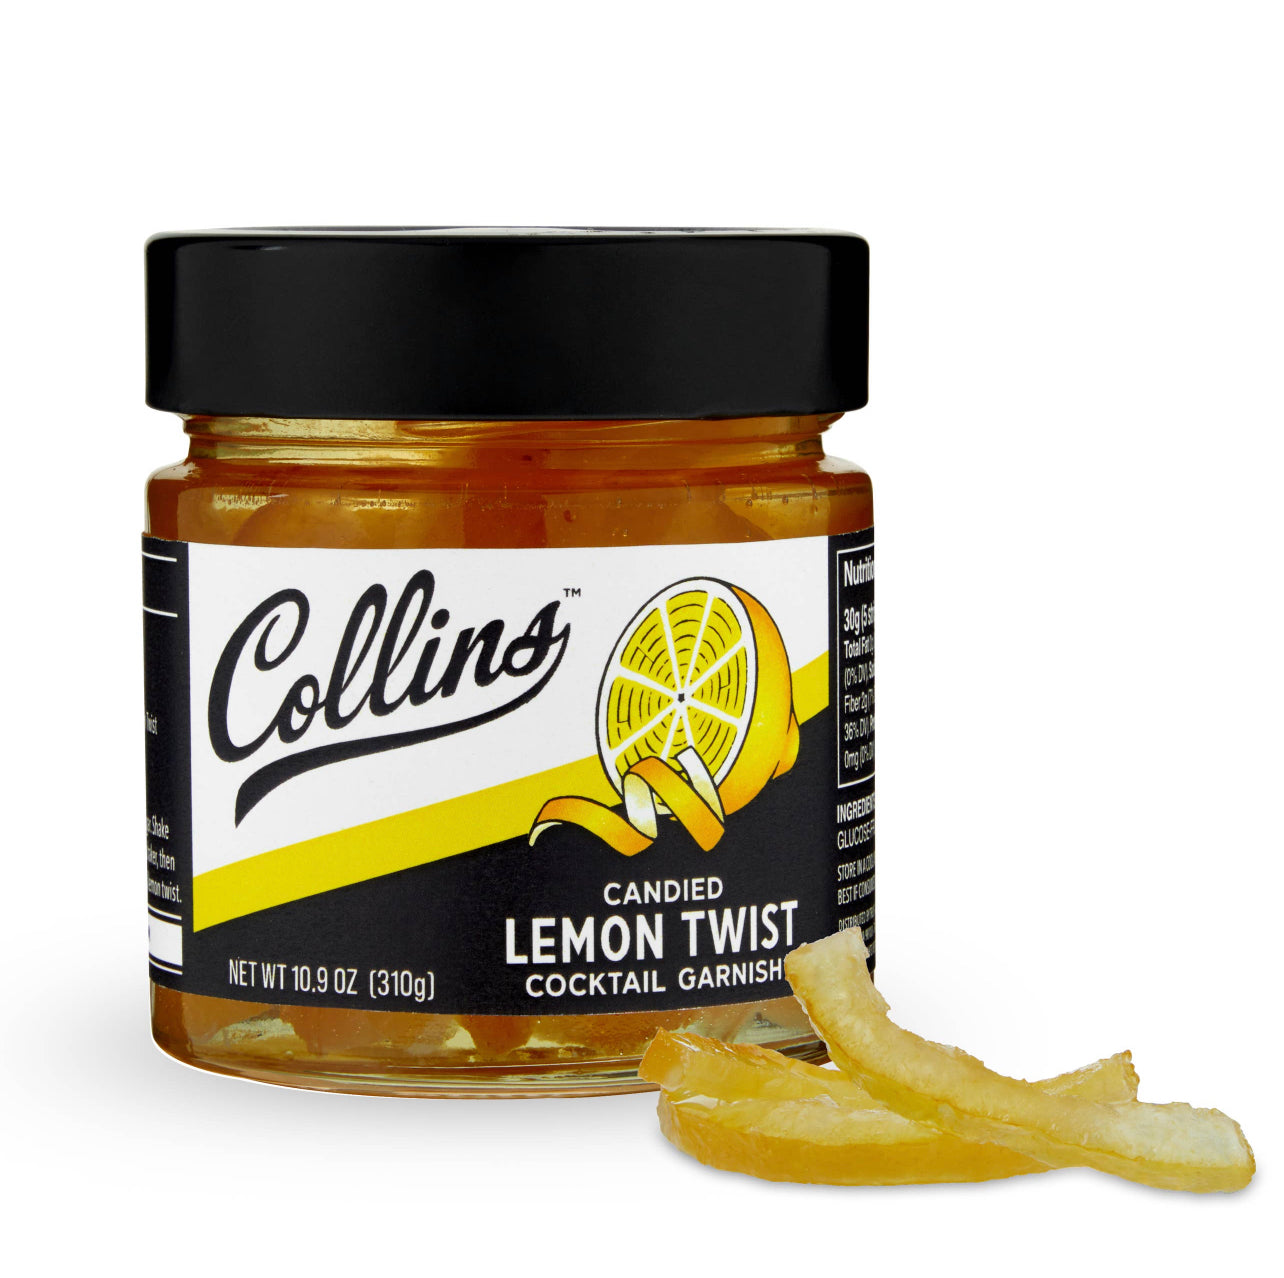 10.9 oz jar of candied lemon twist cocktail garnish by Collins